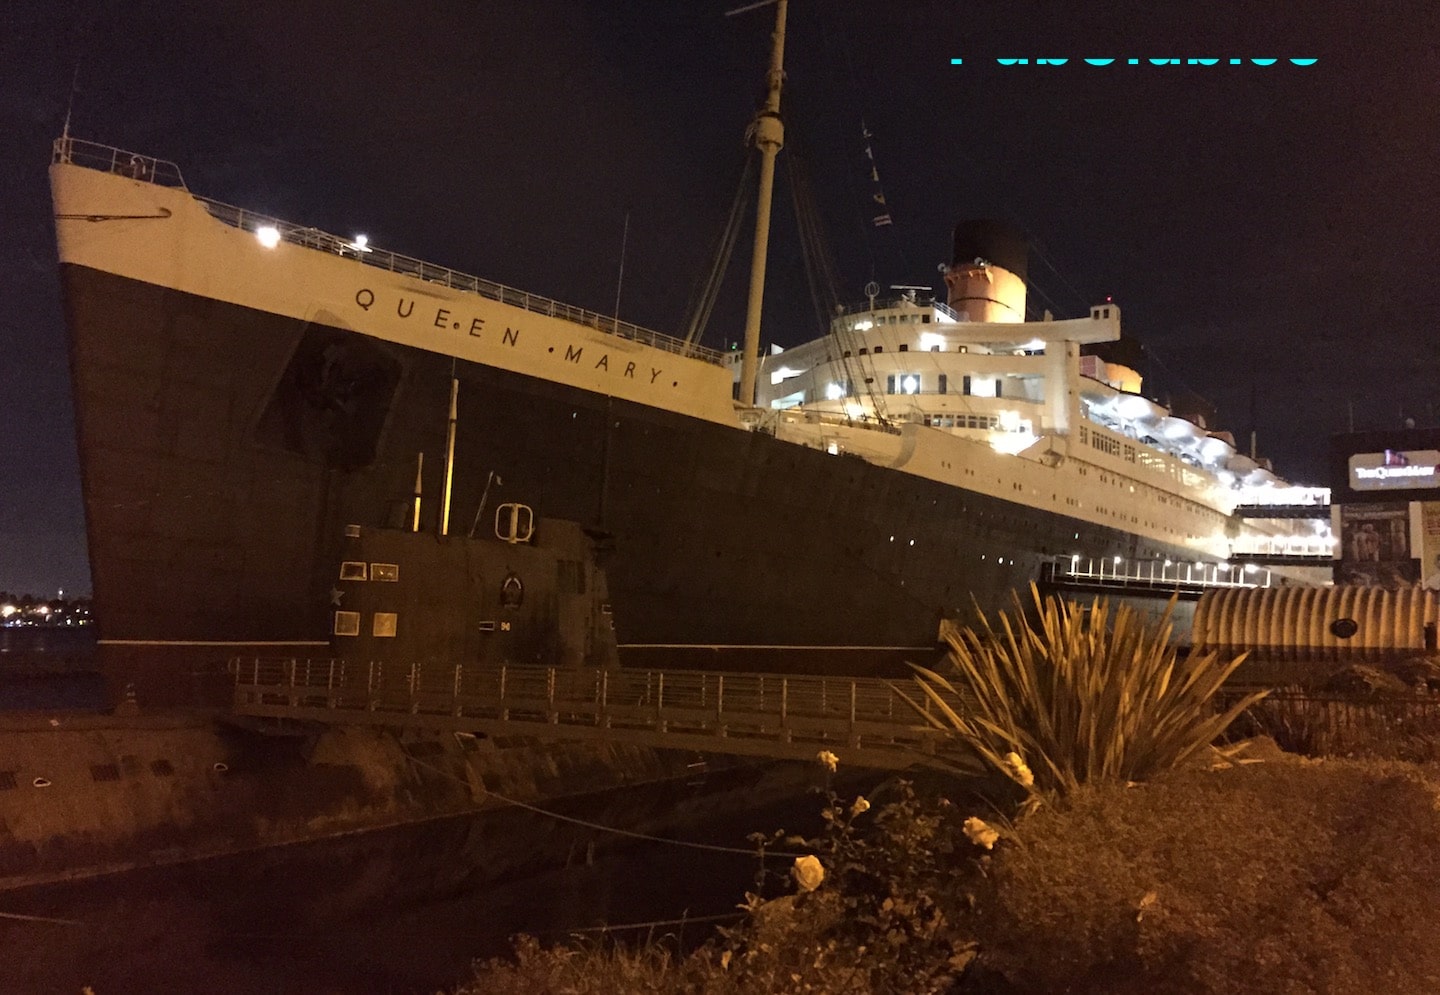 Queen Mary at nite Long Beach, CA